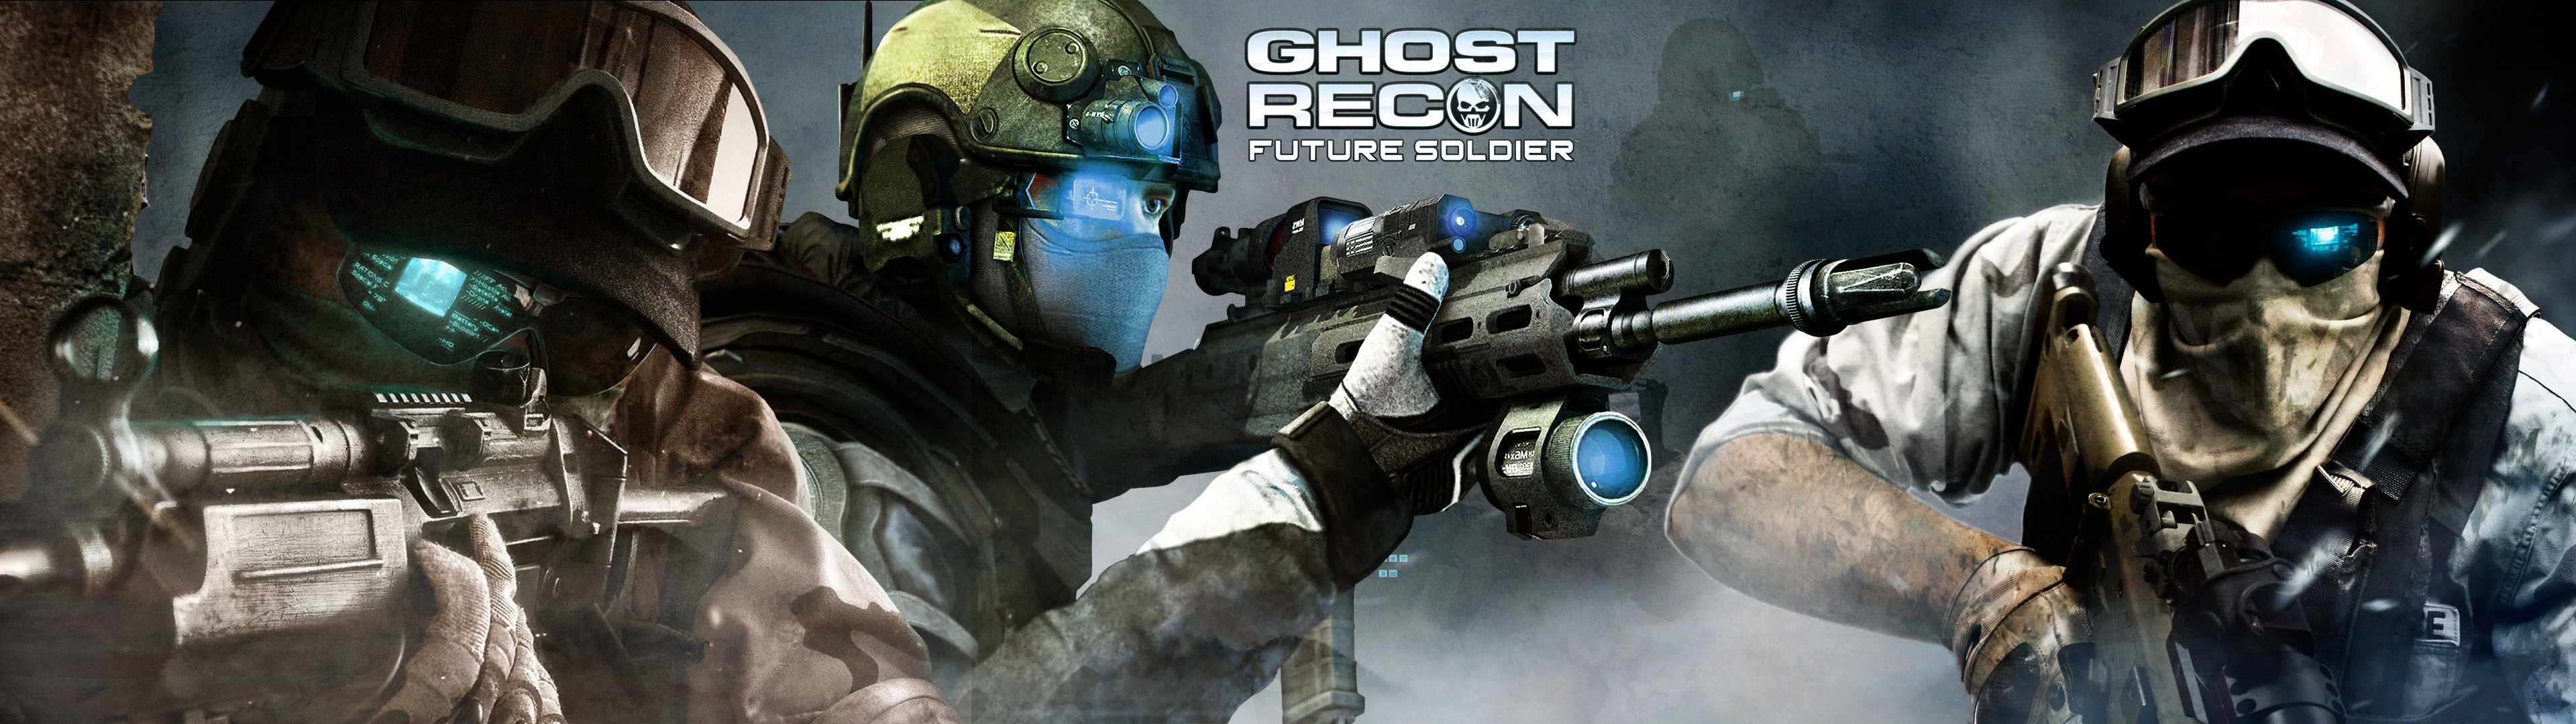 3840x1080 ... Ghost Recon: Future Soldier (Widescreen Wallpaper) by cursedblade1337